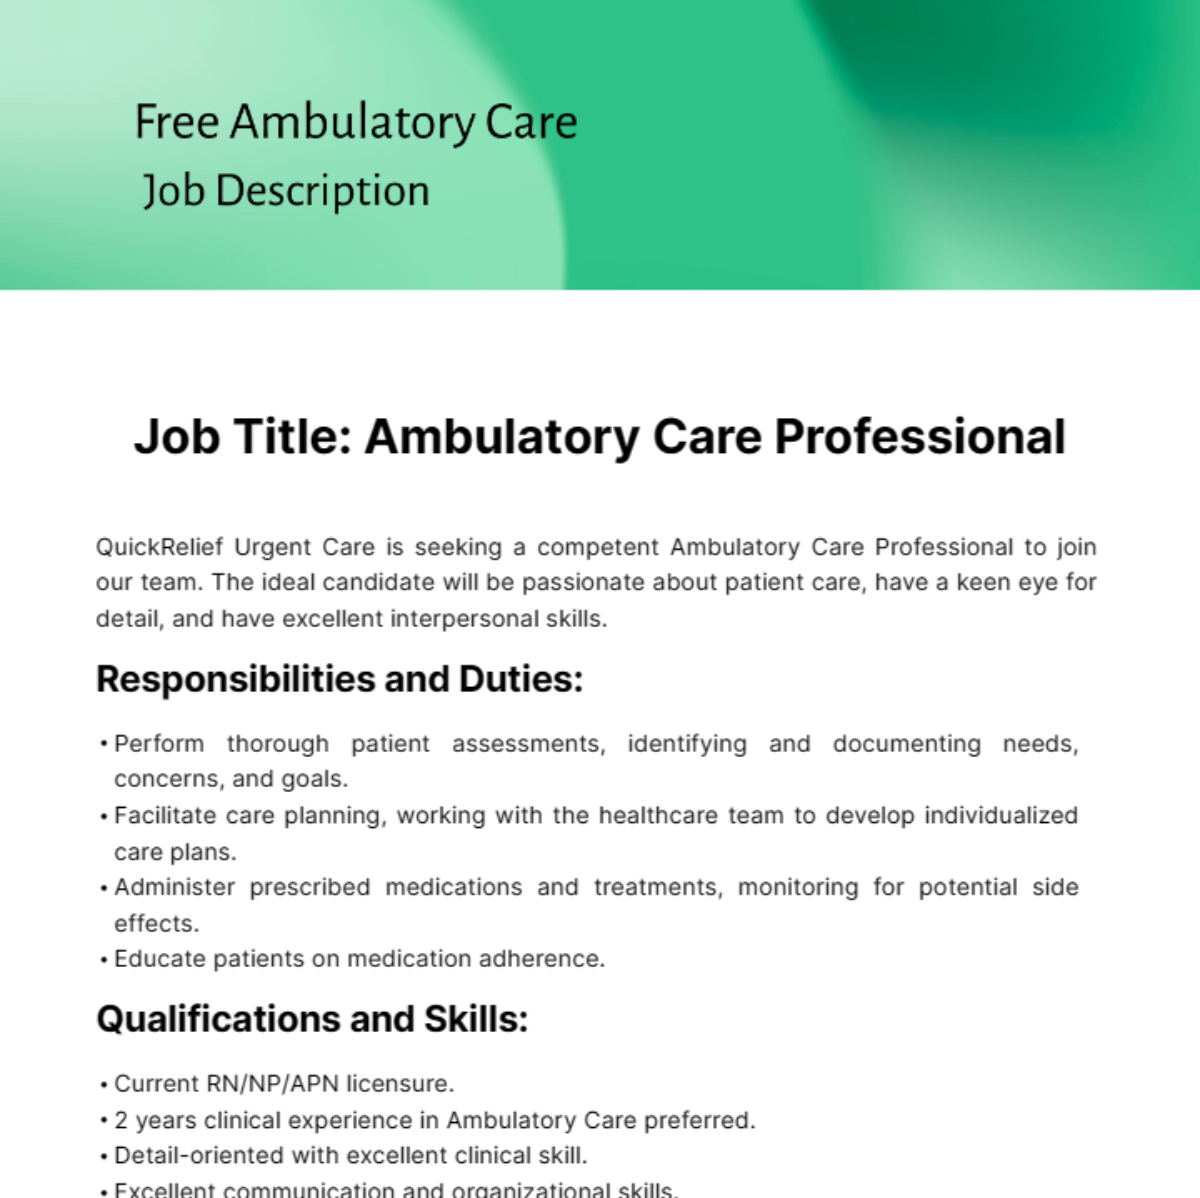 Free Ambulatory Care Job Description Template